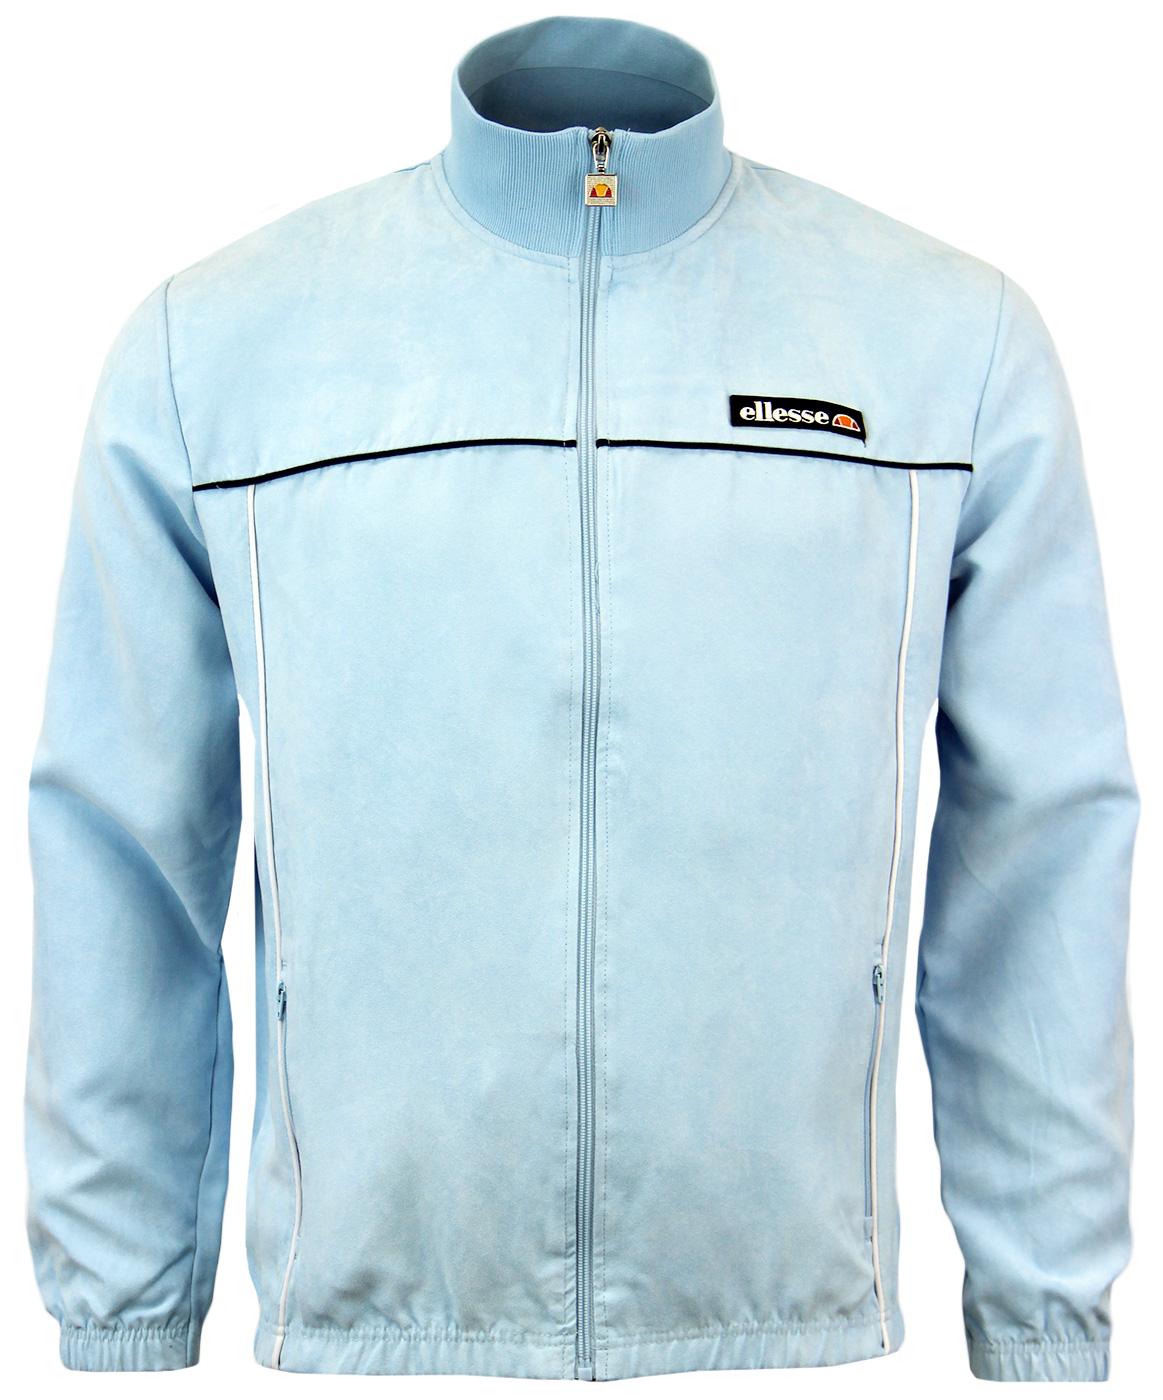 ELLESSE Marzio Retro 1980s Velour Track Jacket in Placid Blue